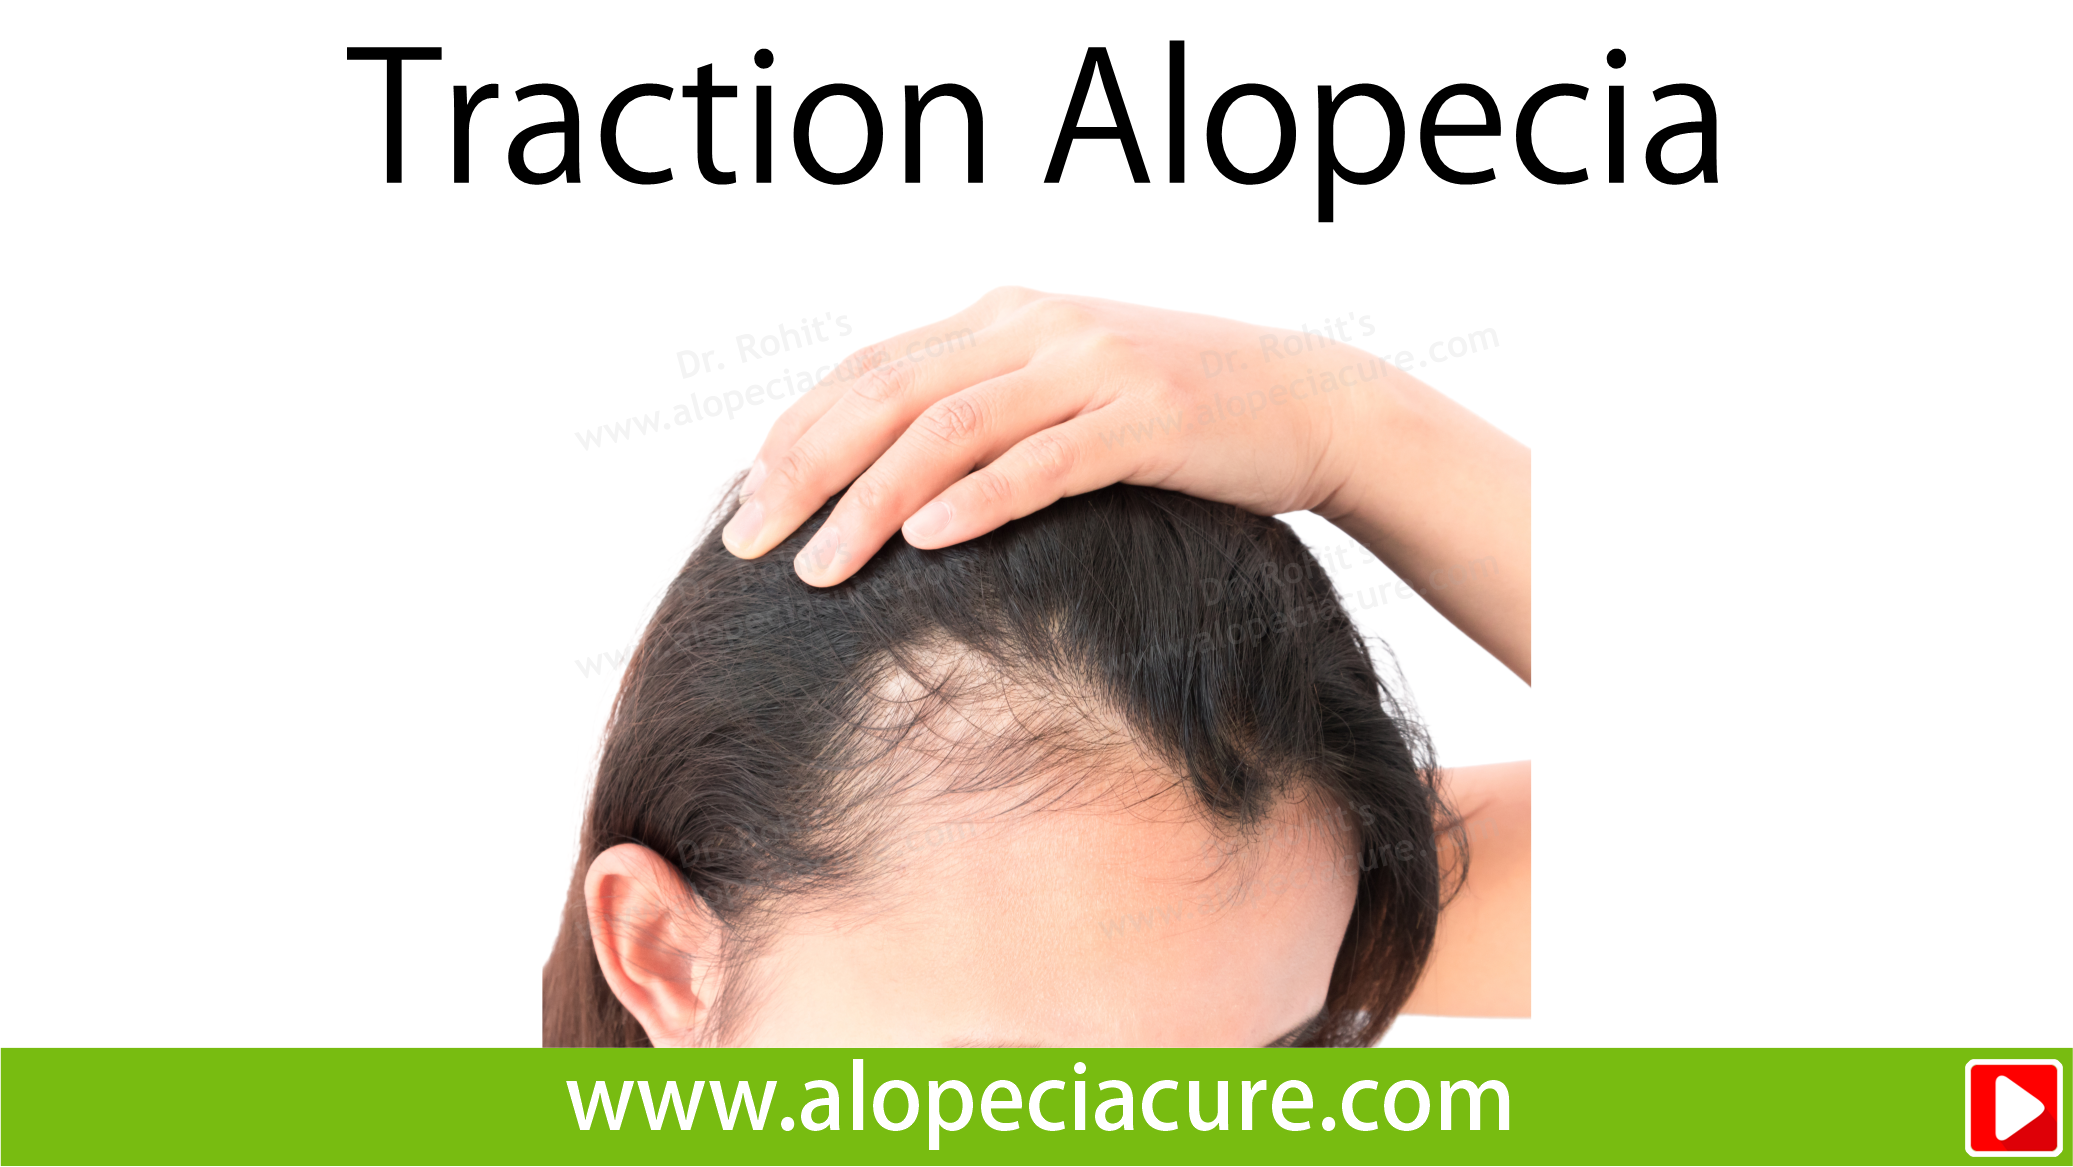 tractional alopecia